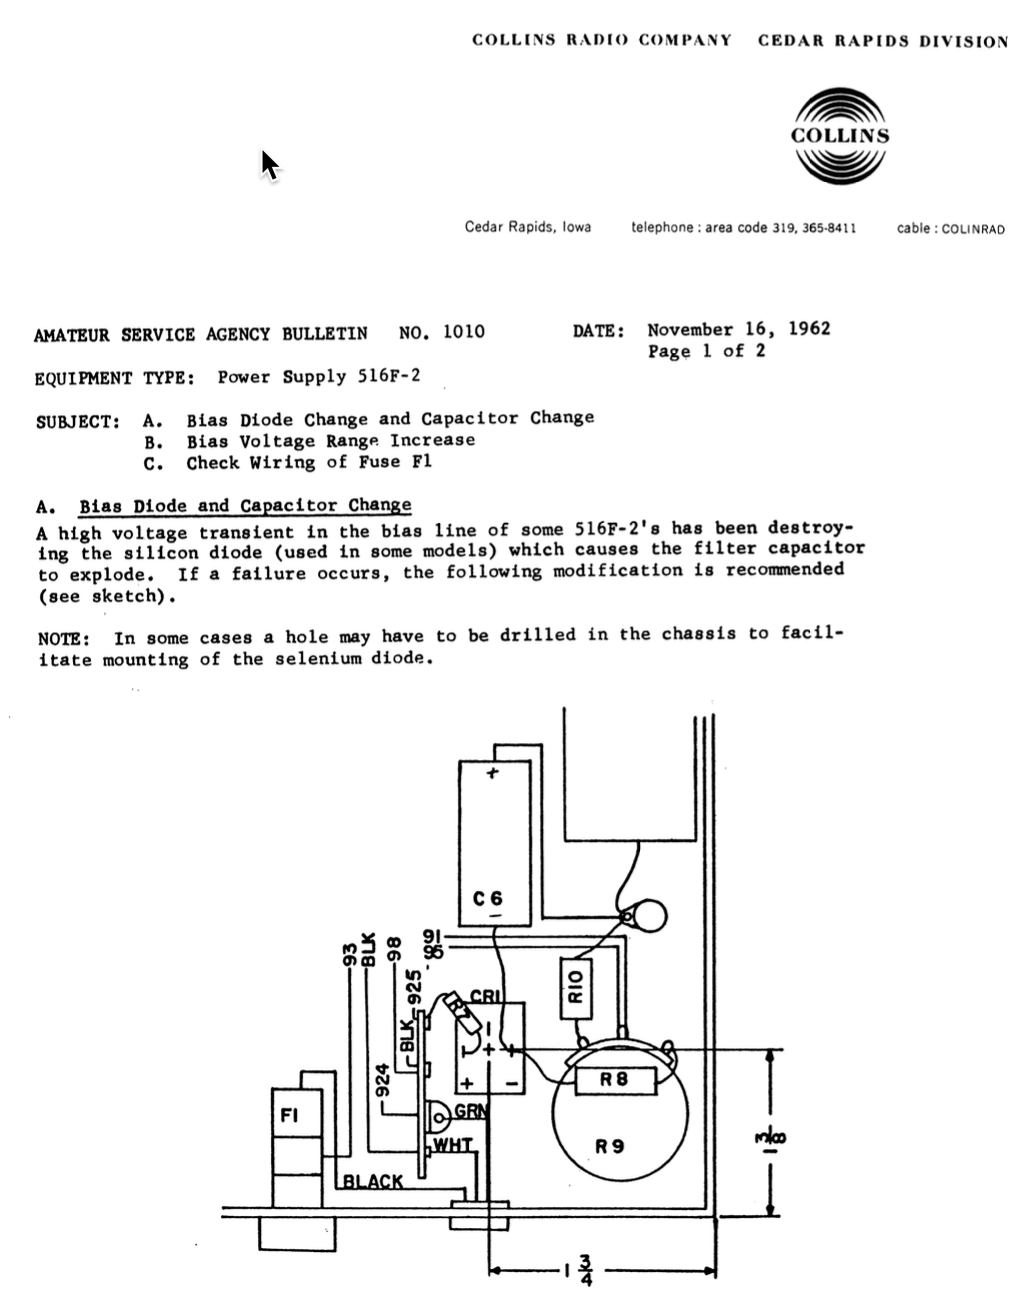 Collins Amateur Service Agency Bulletin Number 1010 (1962-11)